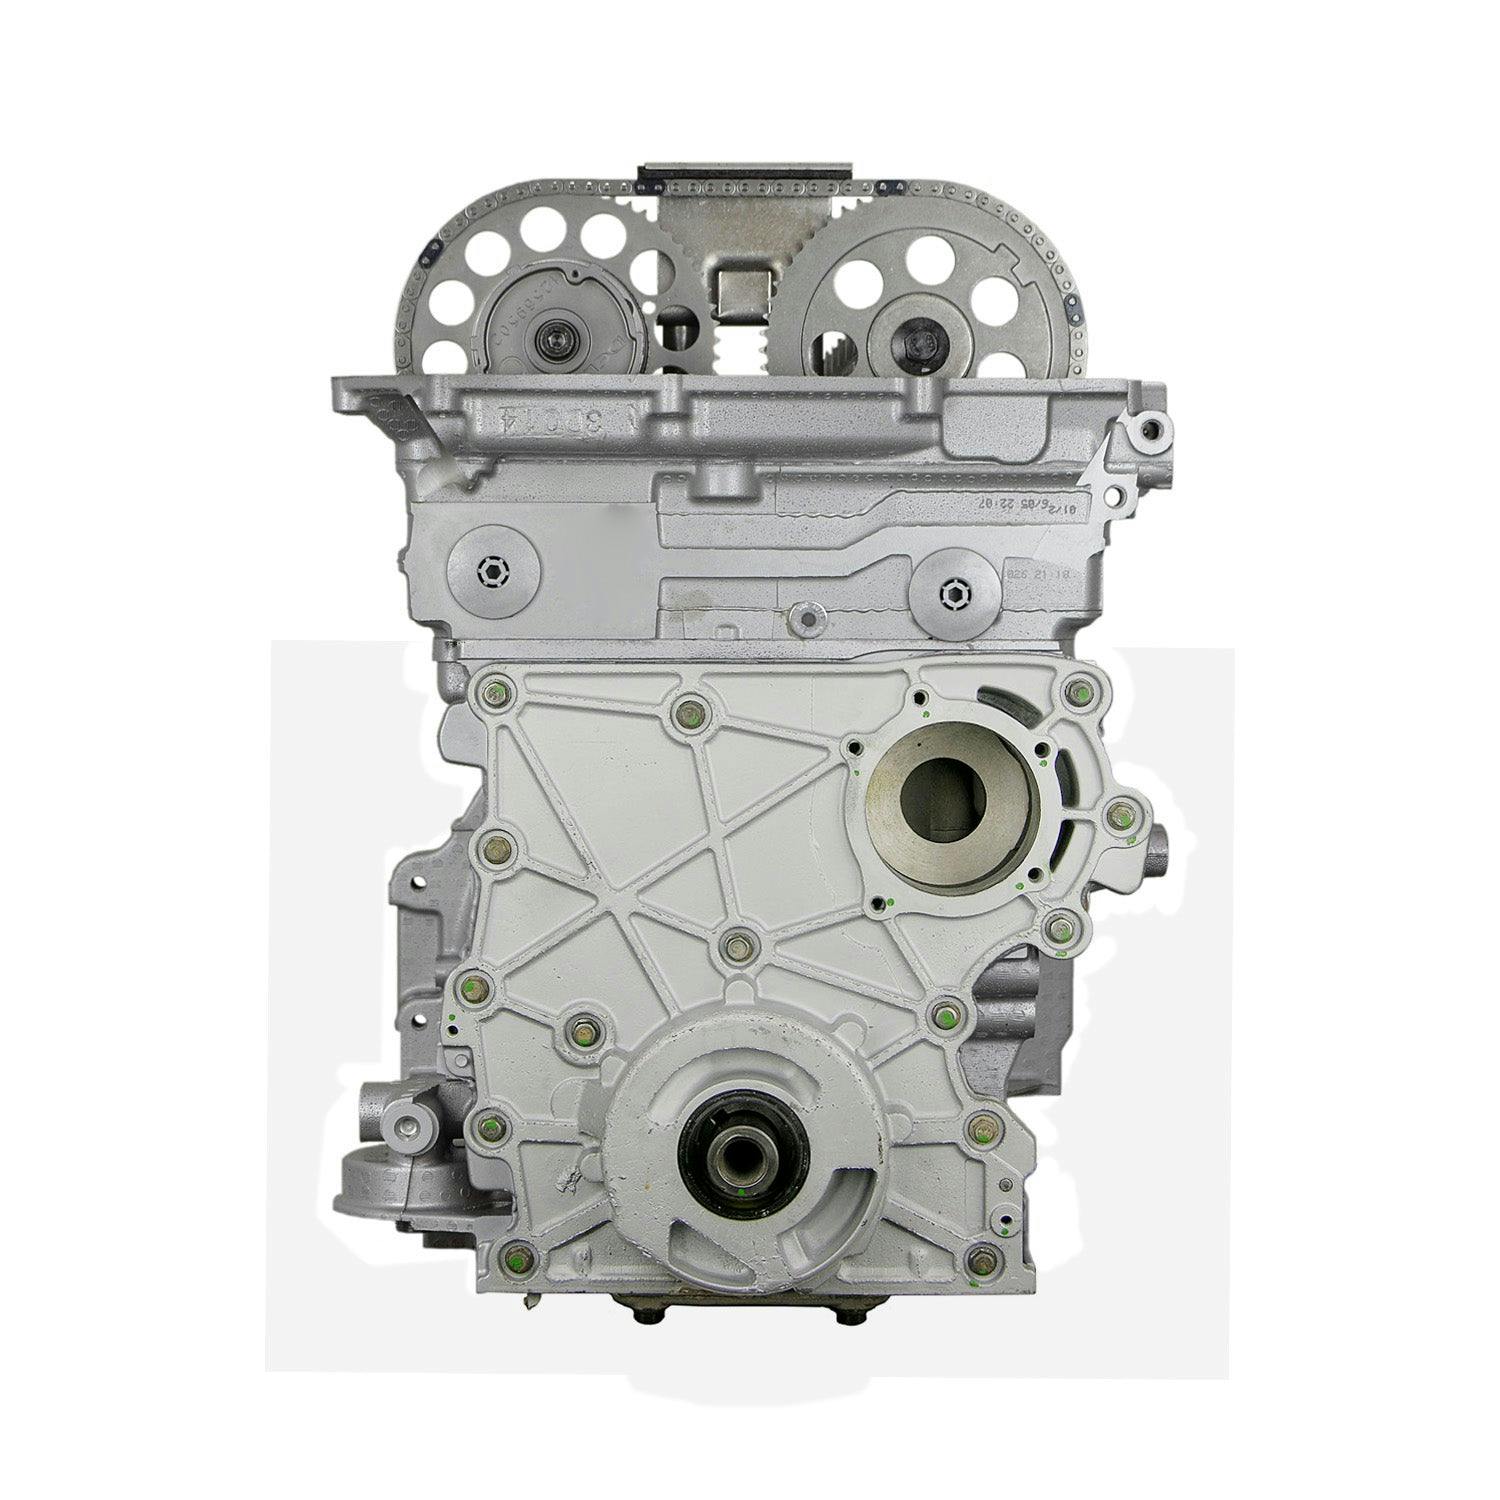 4.2L Inline-6 Engine for 2005 Buick Rainier/Chevrolet Trailblazer, Trailblazer EXT/GMC Envoy, Envoy XL, Envoy XUV/Isuzu Ascender/Saab 9-7x